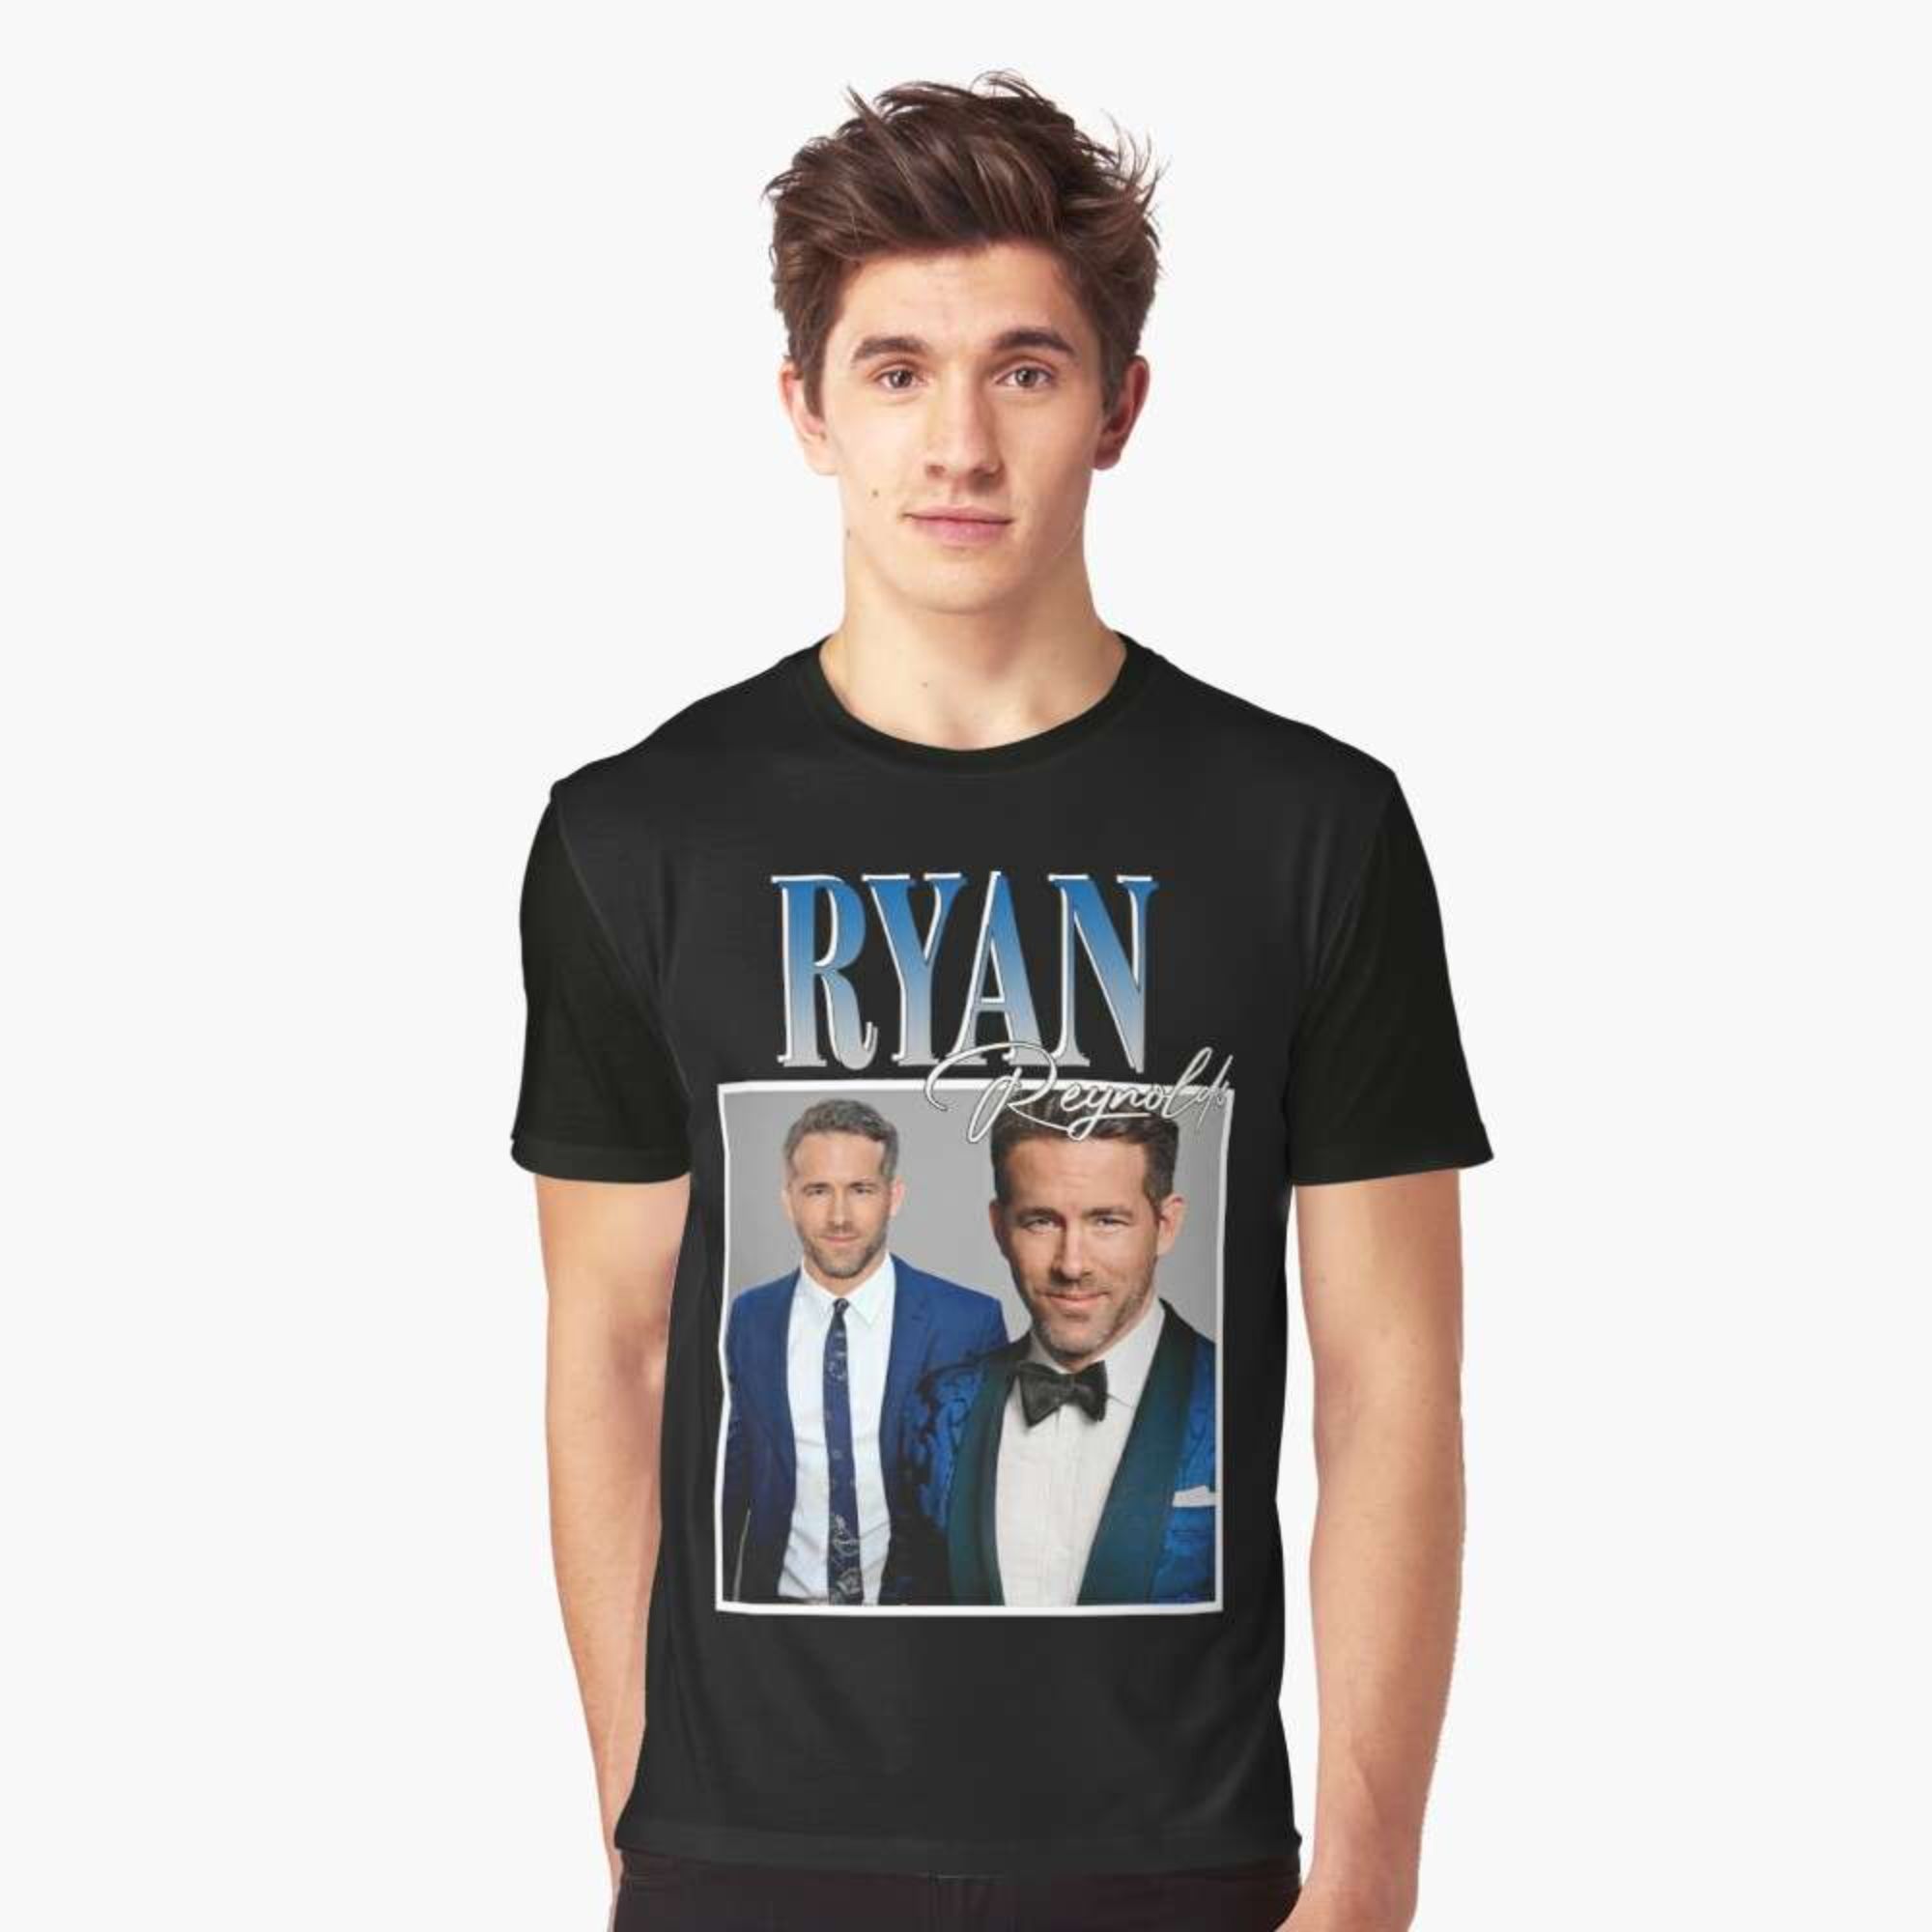 https://eagleazshop.com/wp-content/uploads/2021/11/ryan-reynolds-actor-unisex-t-shirt_42038635-1.jpg